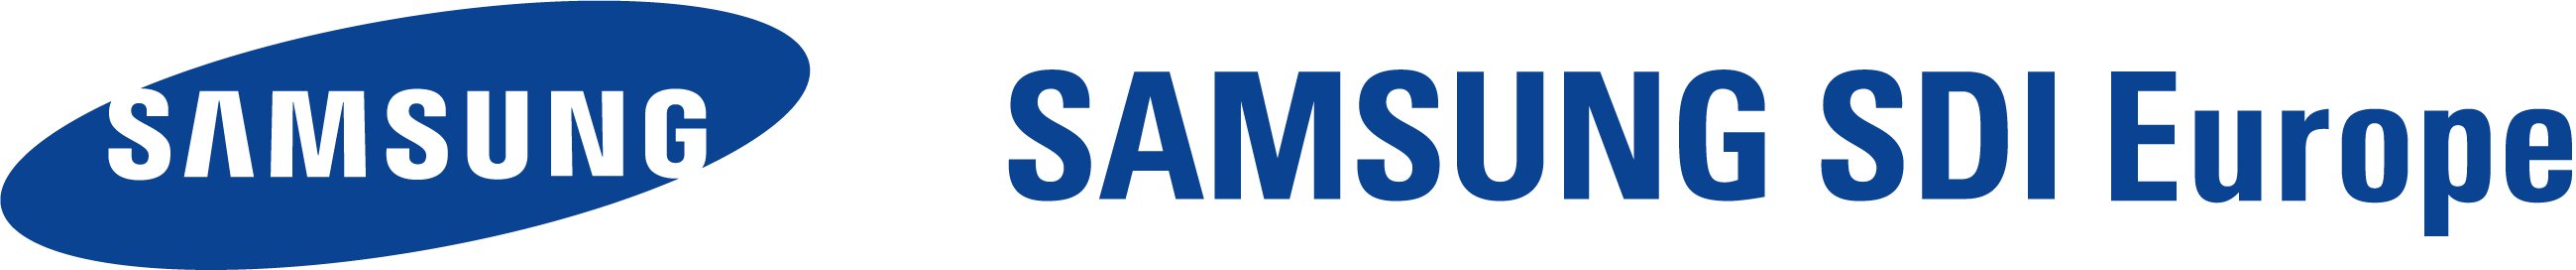 SAMSUNG SDI Europe Logo